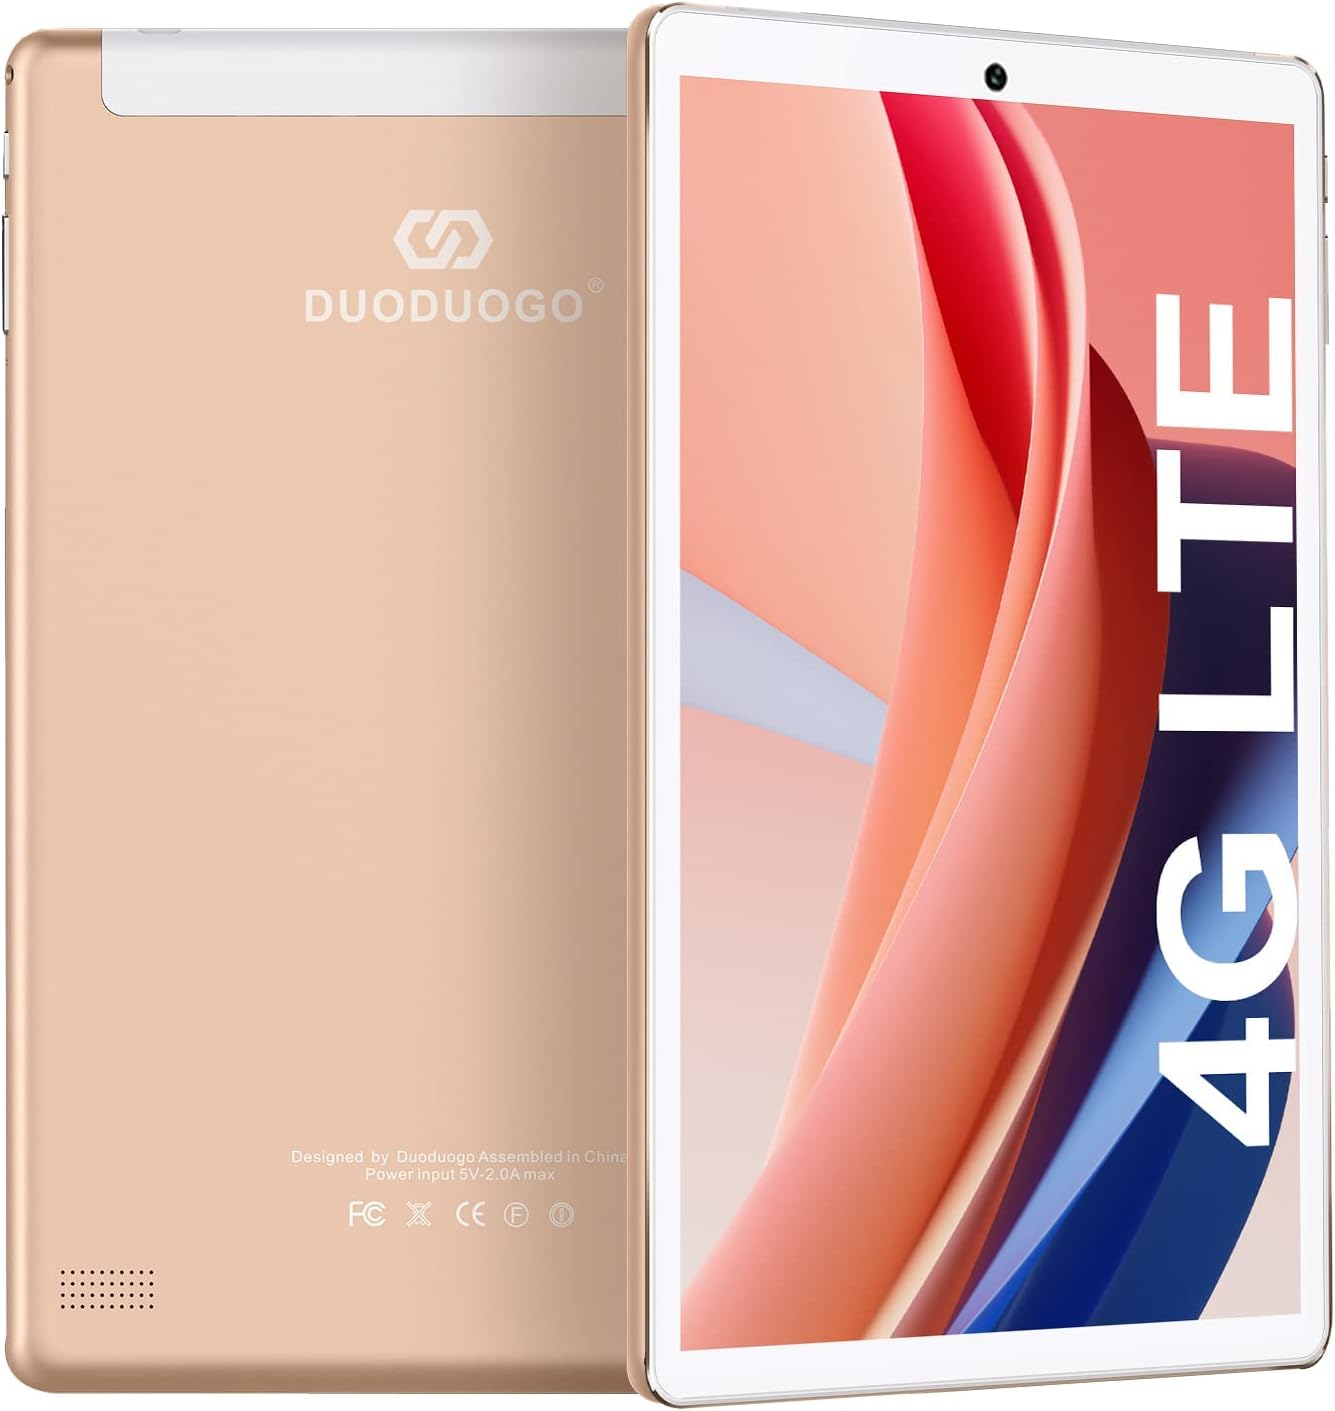 DUODUOGO Tablet 10 pollici offerte 5G WiFi + WiFi6 Android 10.0